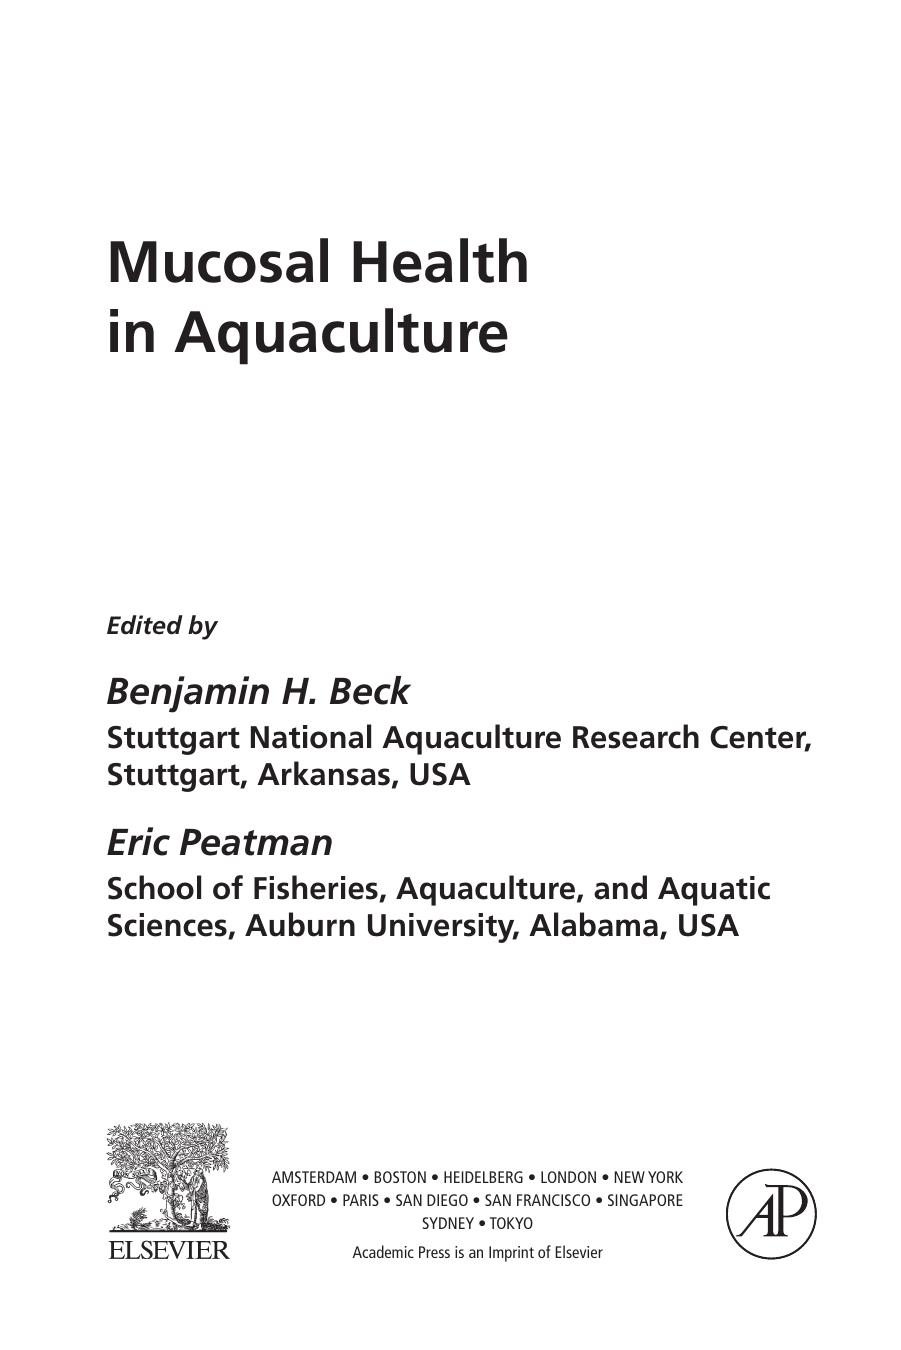 Mucosal Health in Aquaculture-Academic Press (2015)